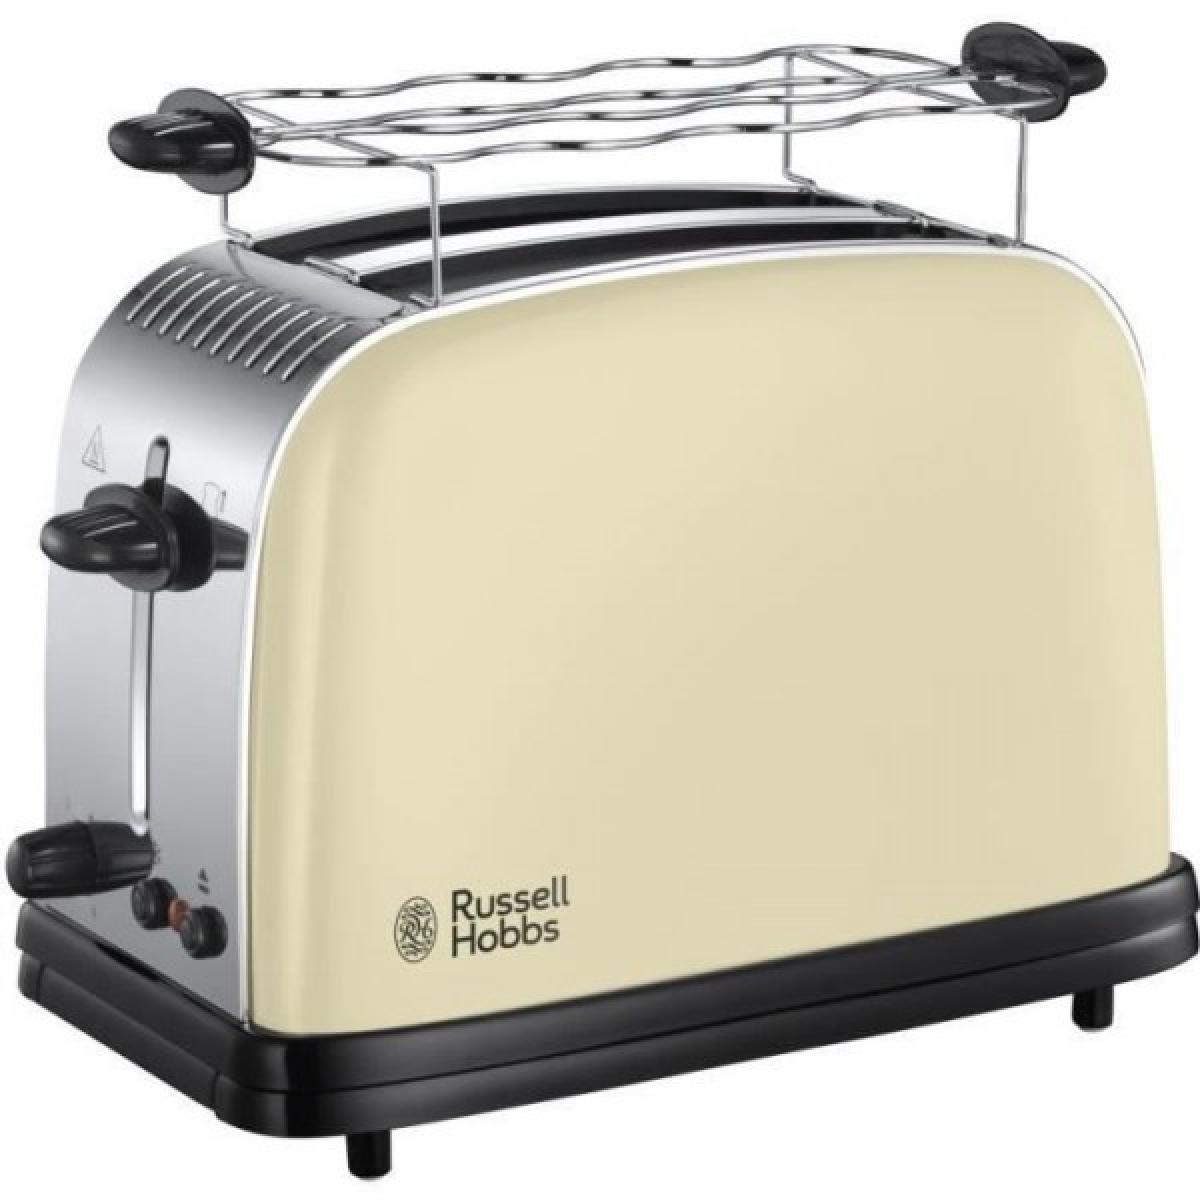 Russell Hobbs Grille Pain - Toaster Electrique RUSSELL HOBBS 23334-56   Colours Plus, Cuisson Rapide Uniforme, Contrôle Brunissage, Chauffe Vionnoiserie Inc